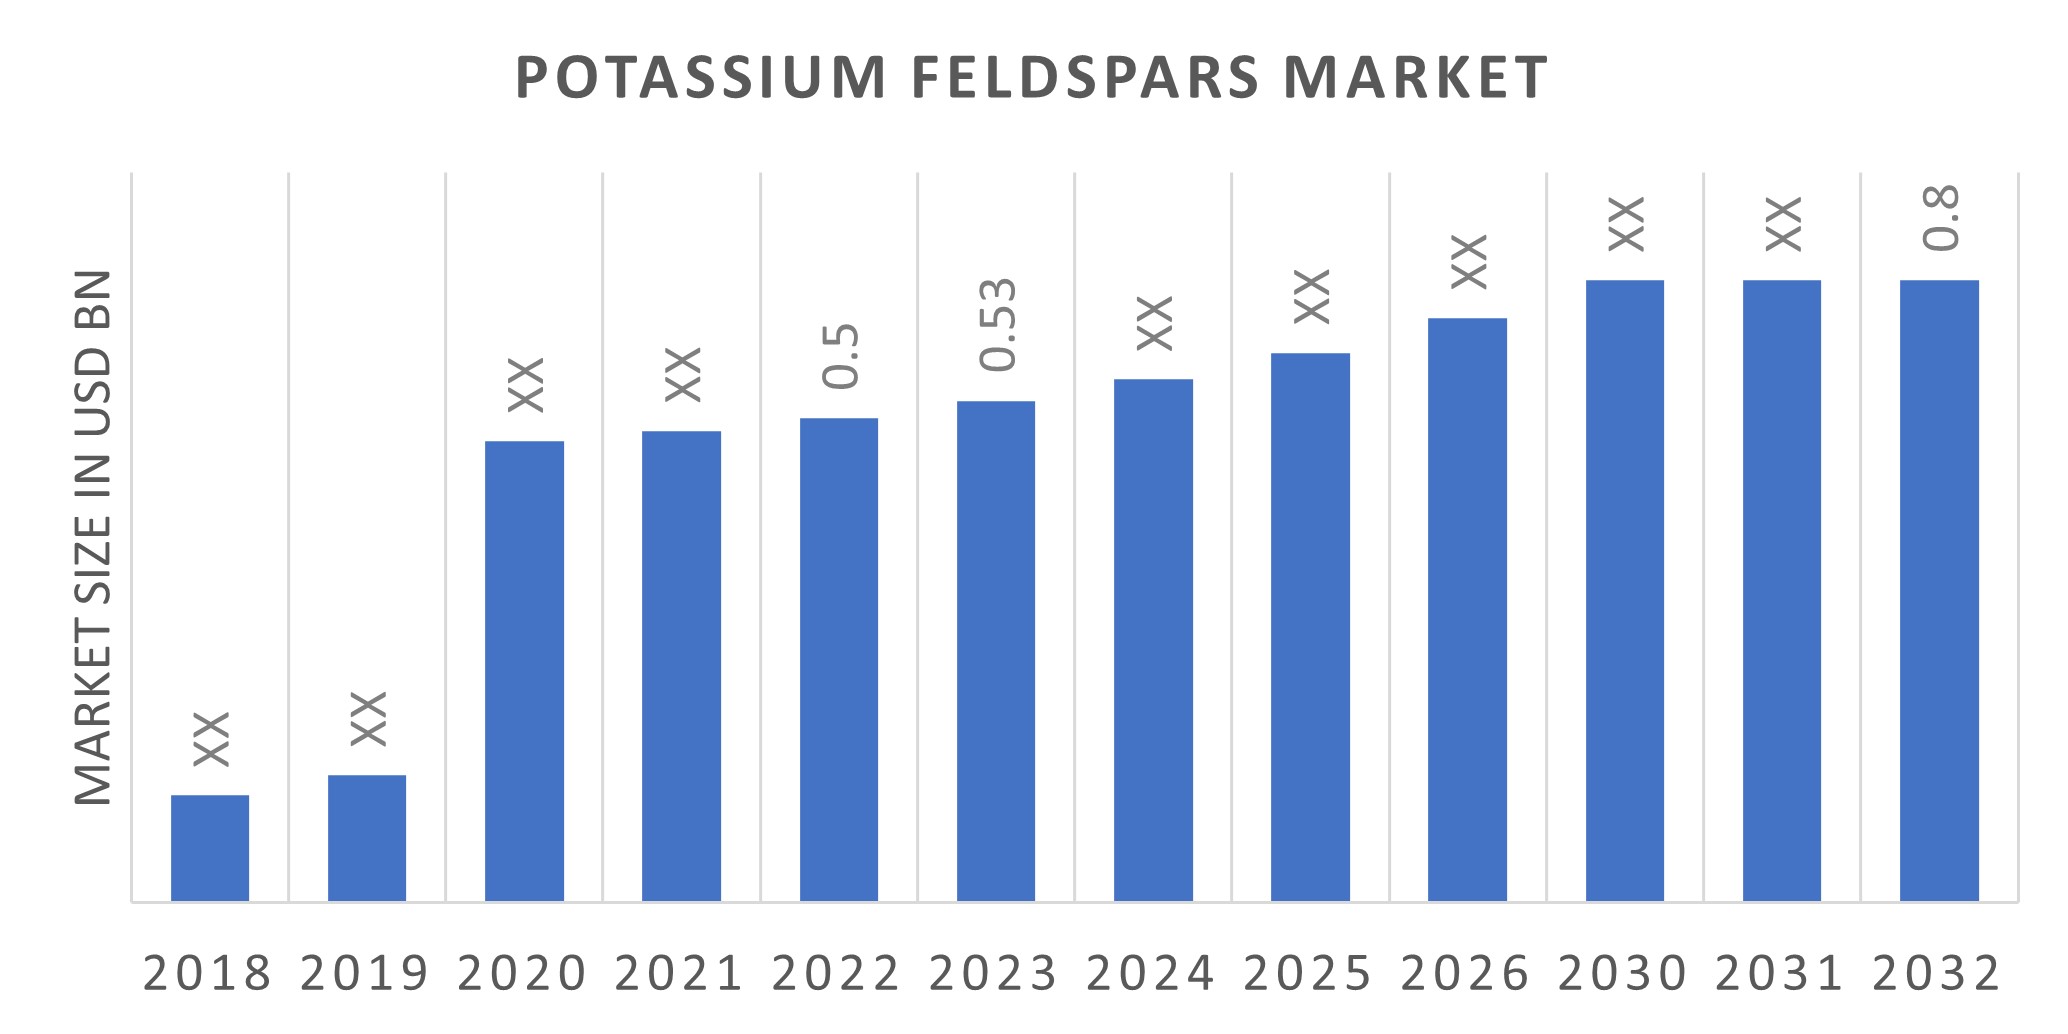 Global Potassium Feldspars Market